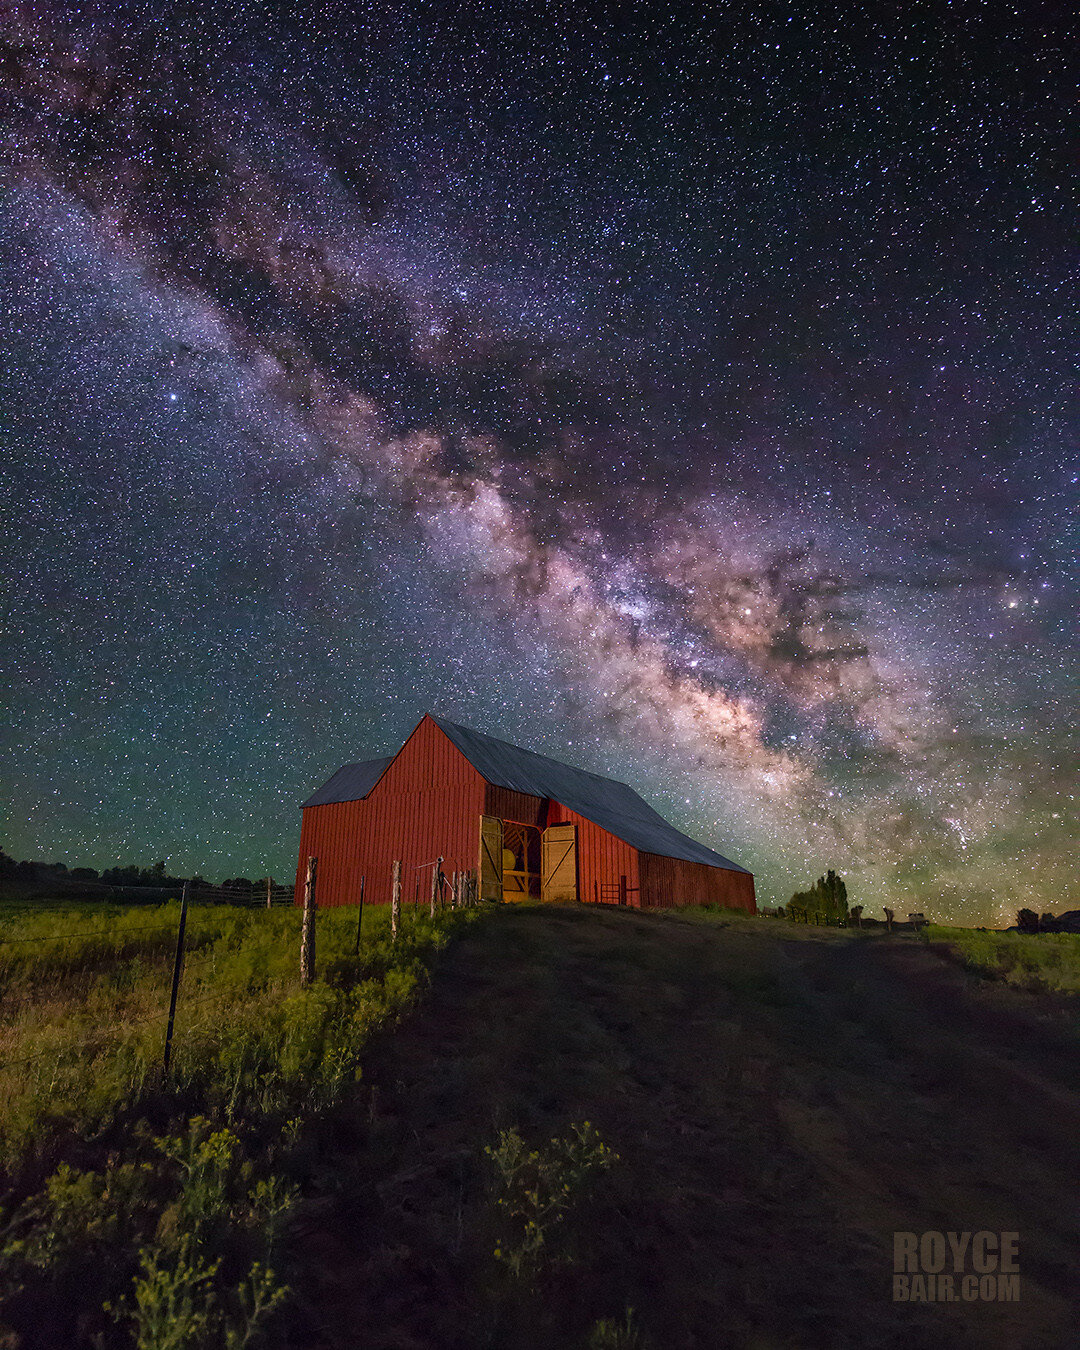 Escalante-barn-nightscape_©Royce-Bair.jpg